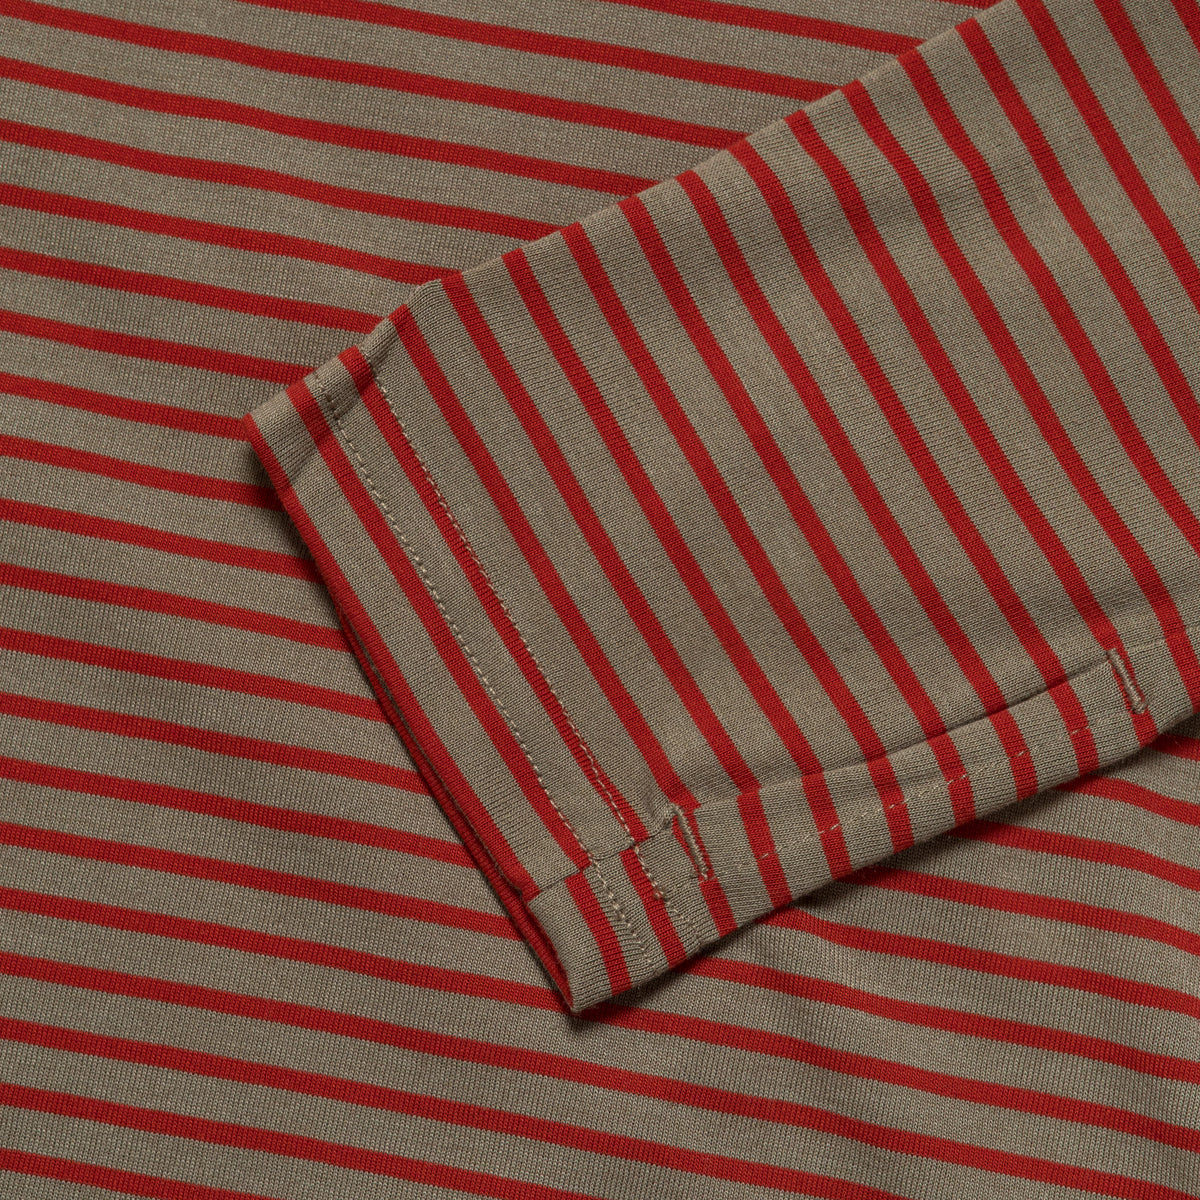 Tracksmith Womens Horizon Long Sleeve - Taupe Scarlet Stripe, UTA